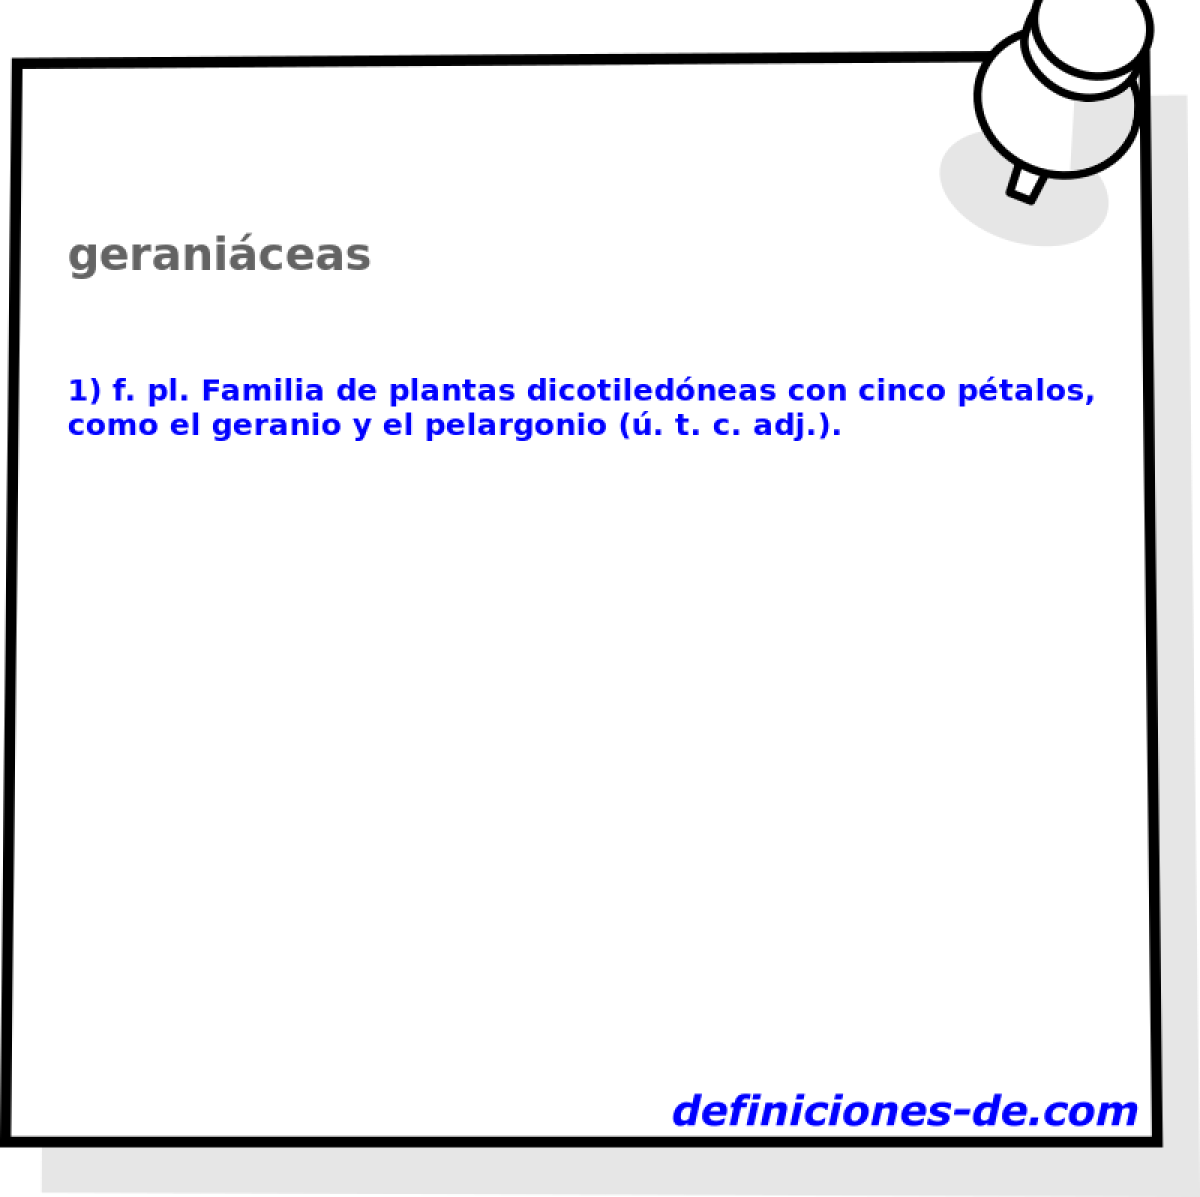 geraniceas 